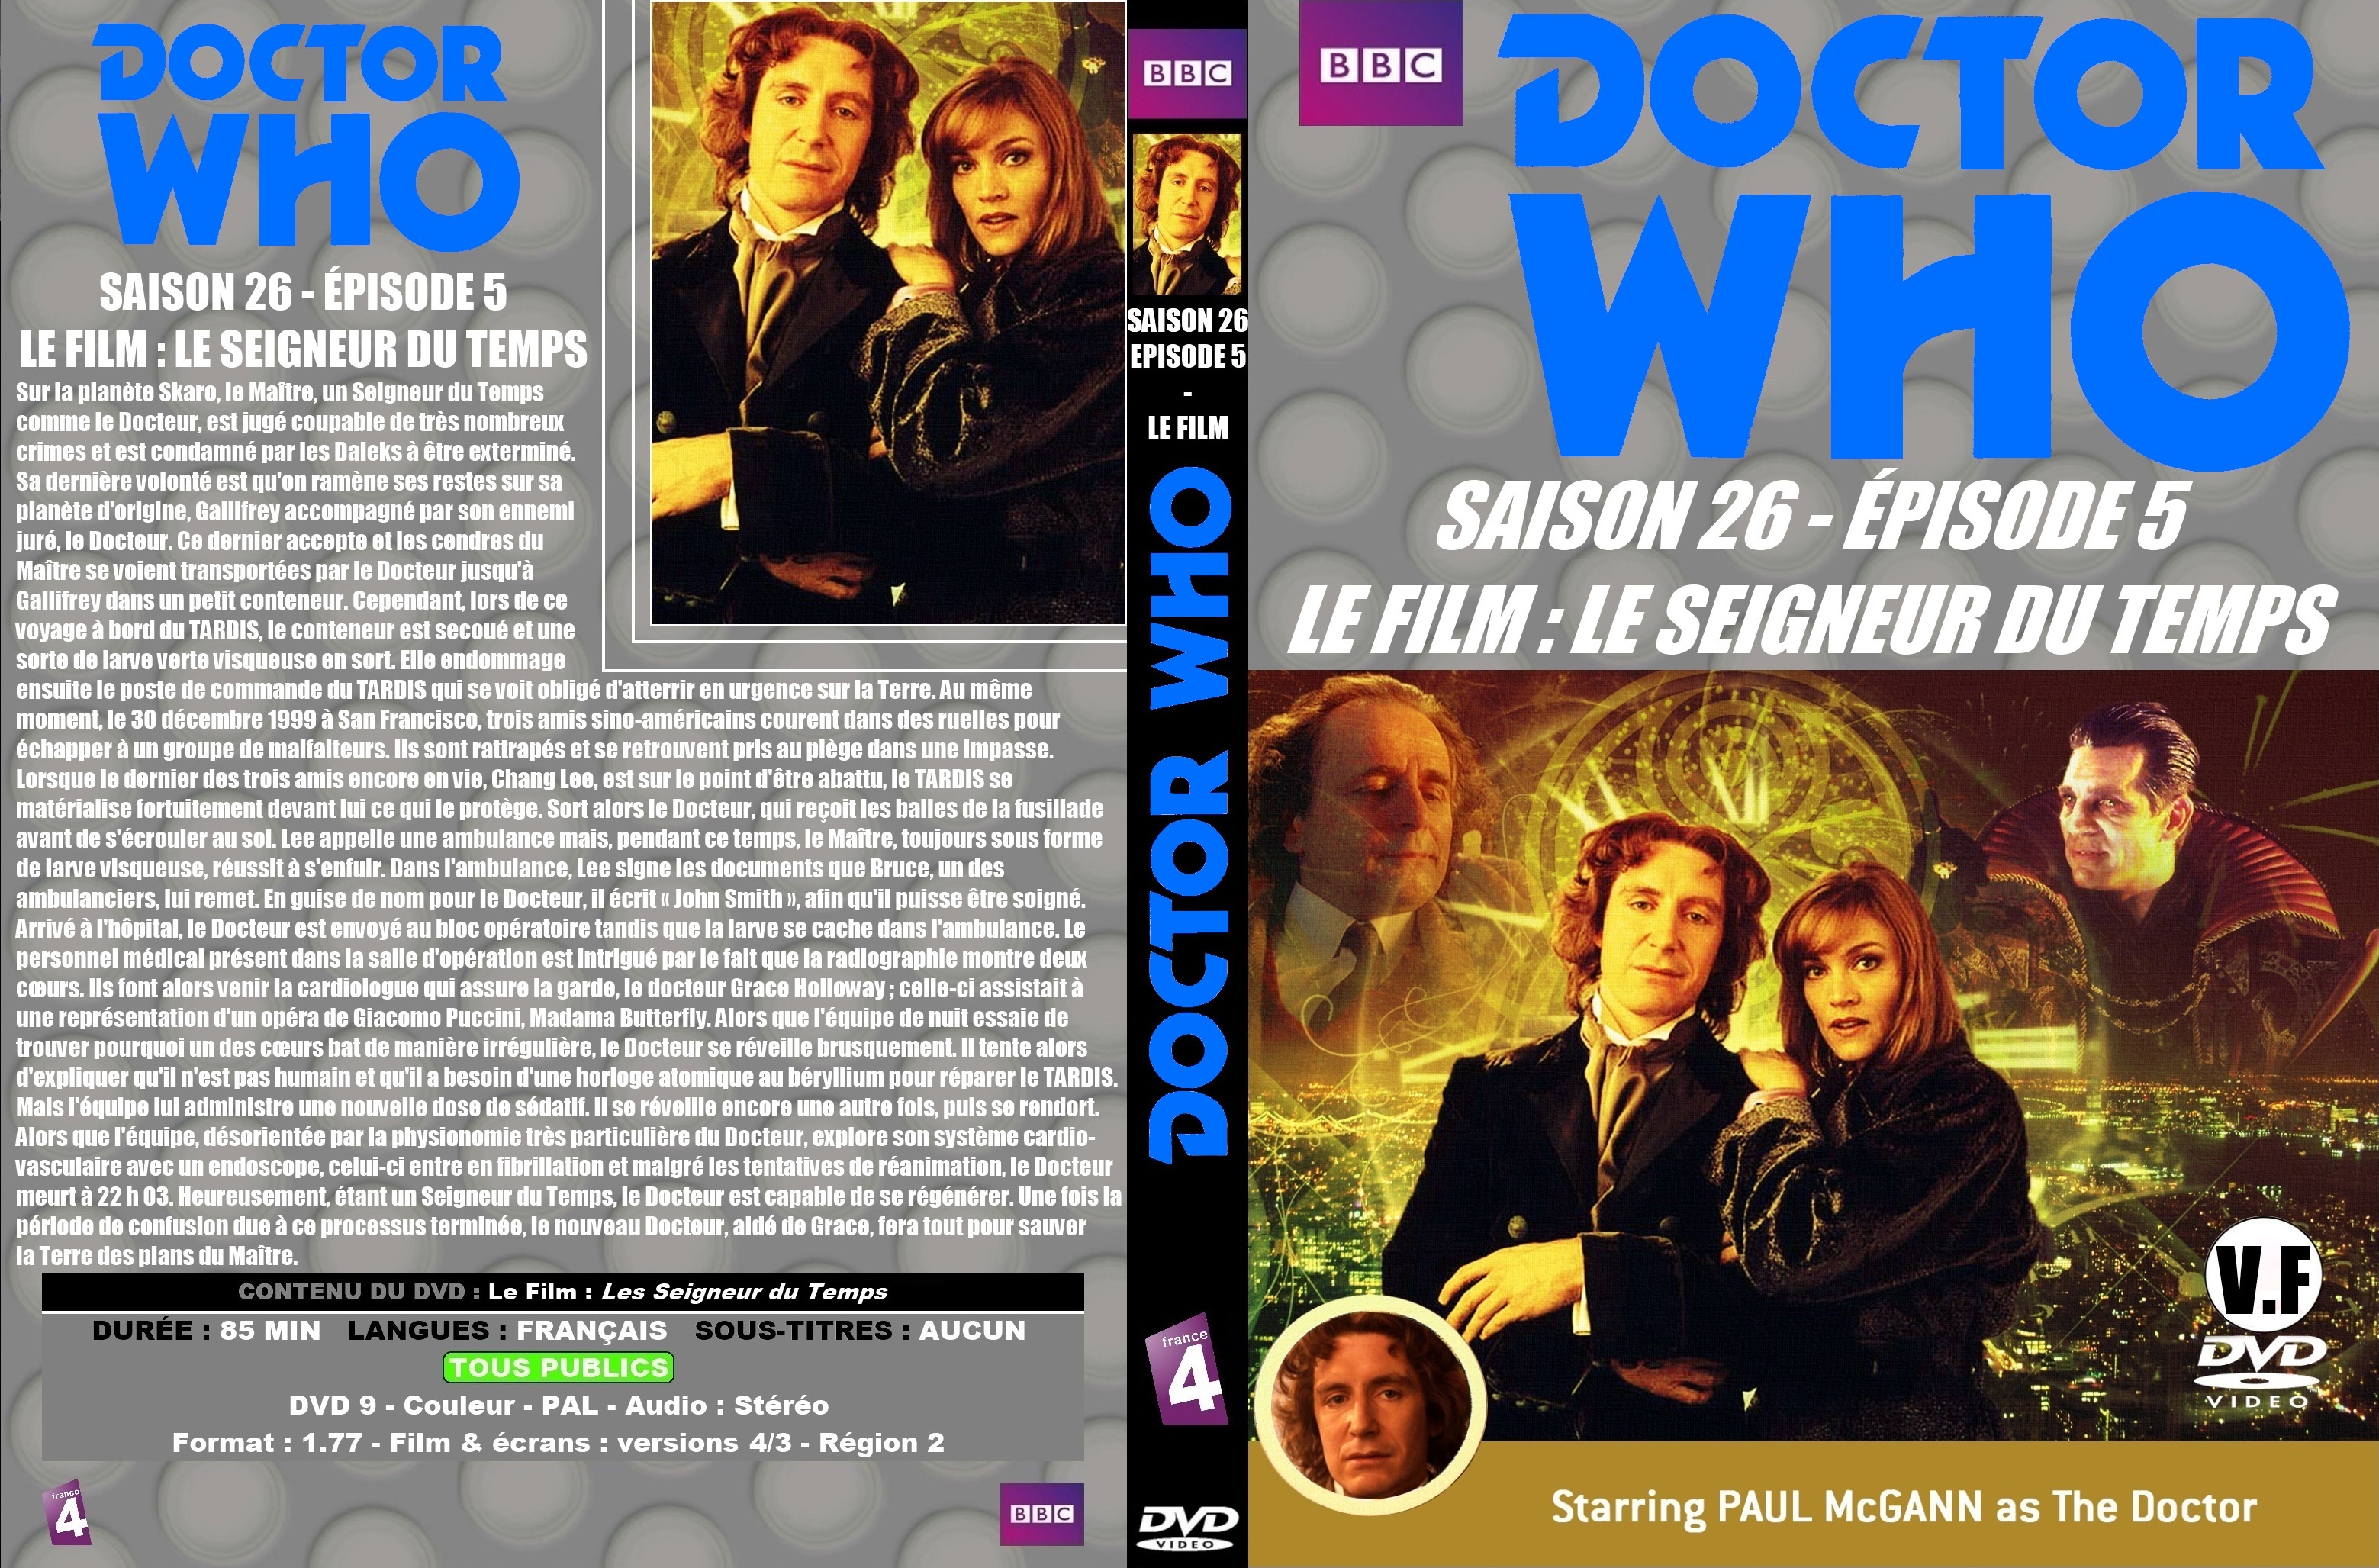 Jaquette DVD Doctor Who Classic Saison 26 pisode 5 custom